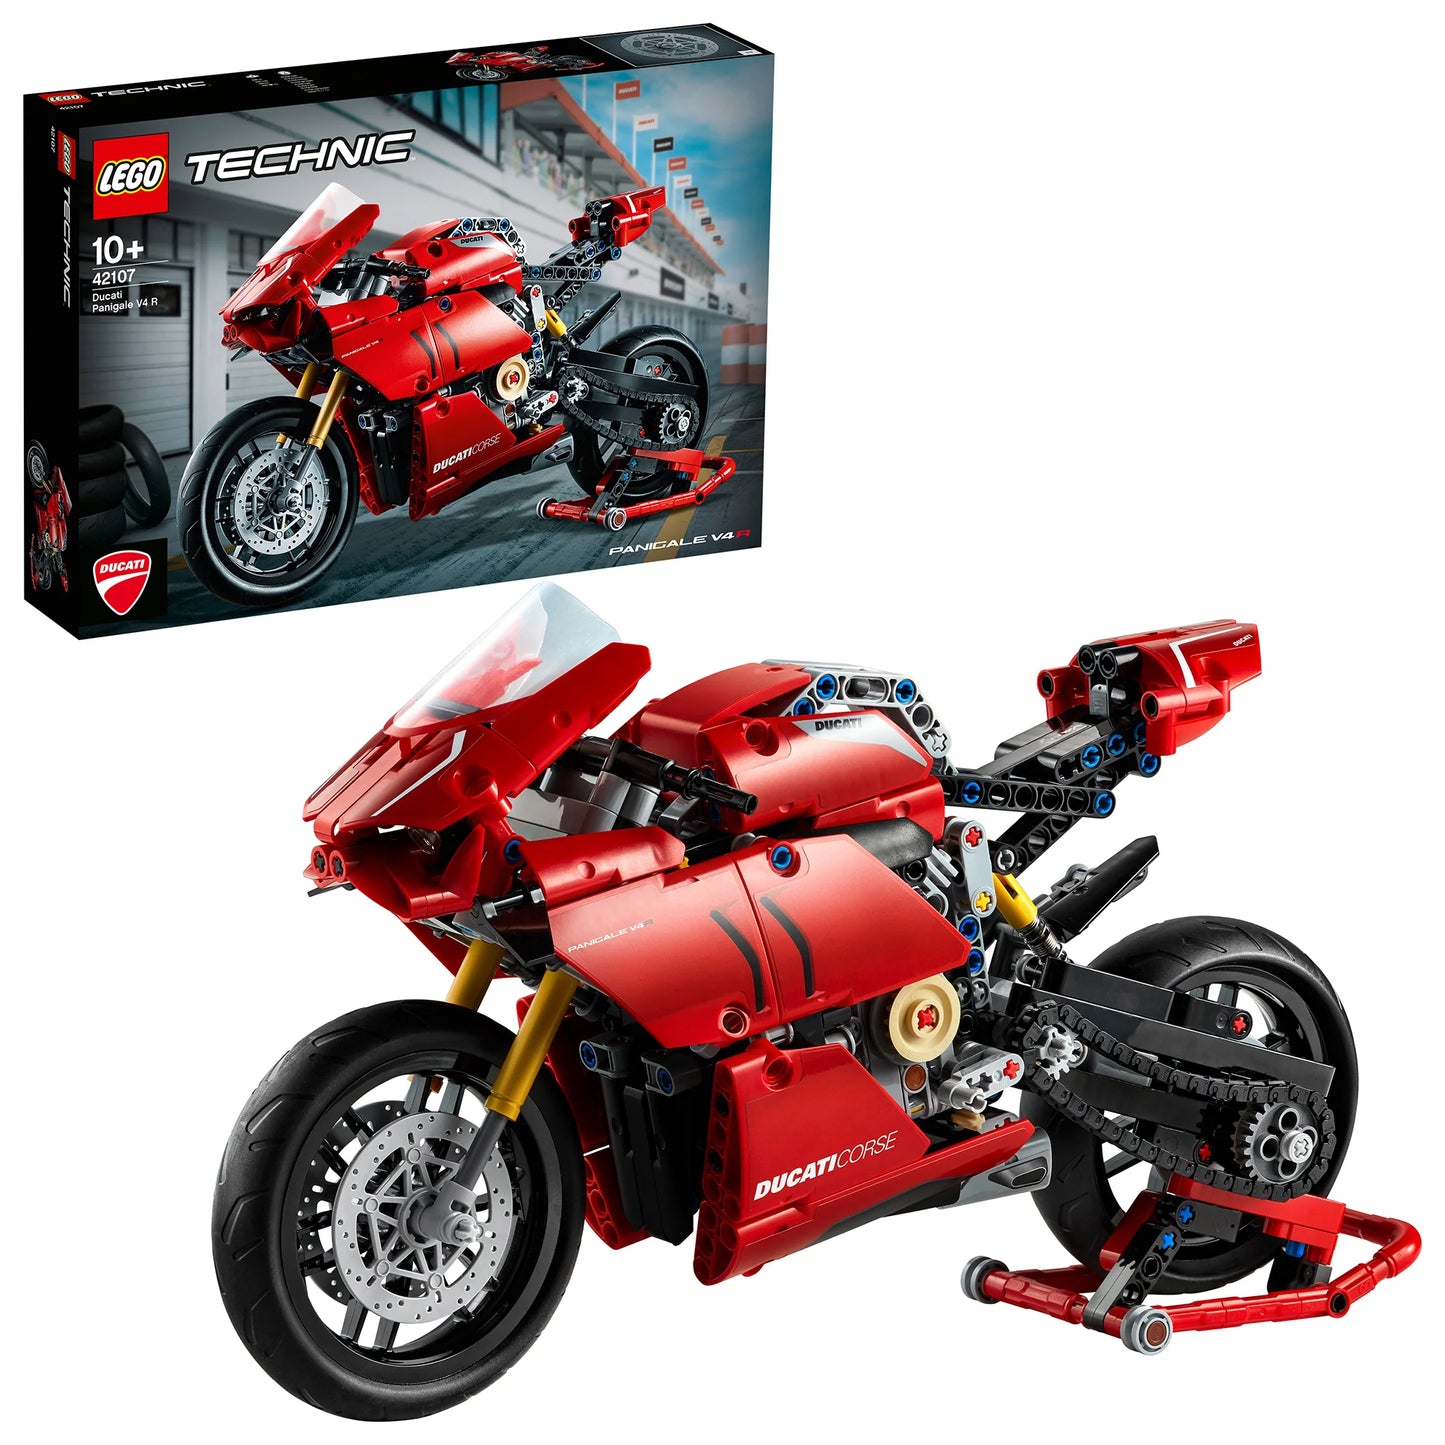 Ducati Panigale V4 R-LEGO Technic